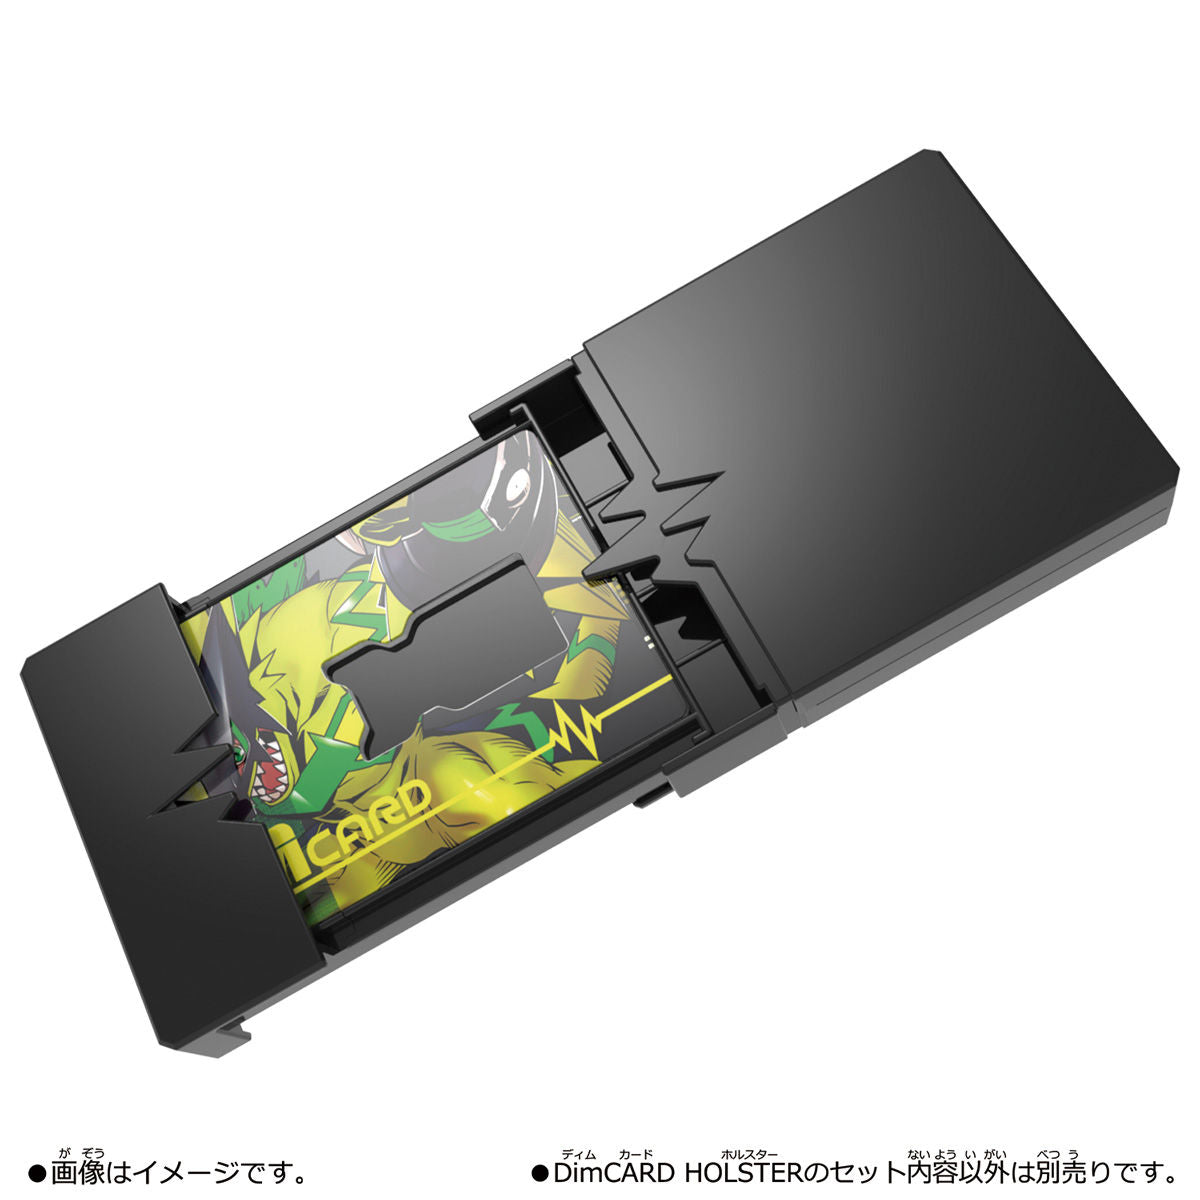 Digimon Dim Card Holster & Dynasty of the Evil Dim Card